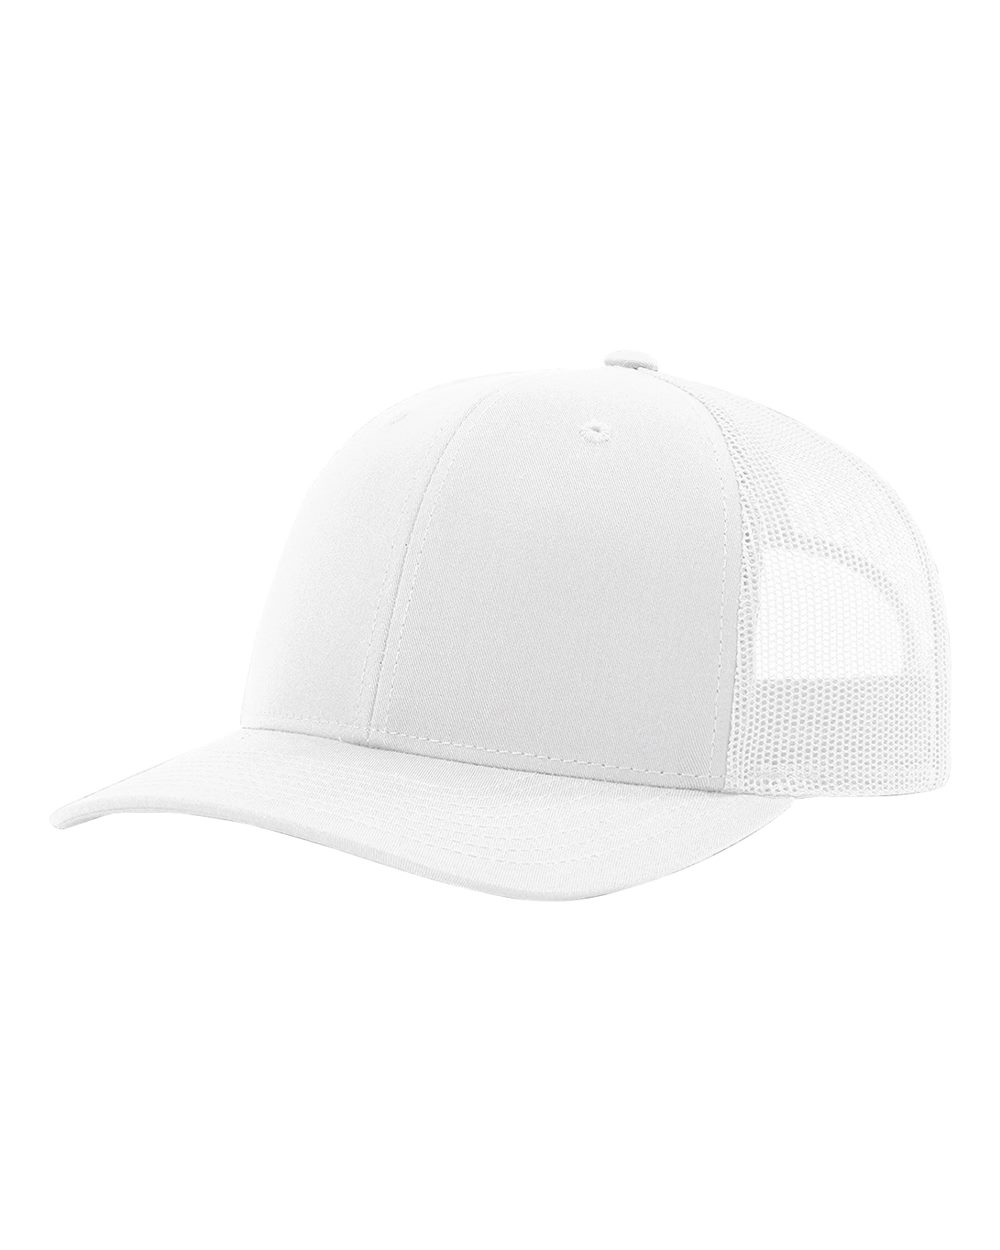 Baseball Cap Trucker 112 Brand New Richardson Snapback Cap Meshback Hat 